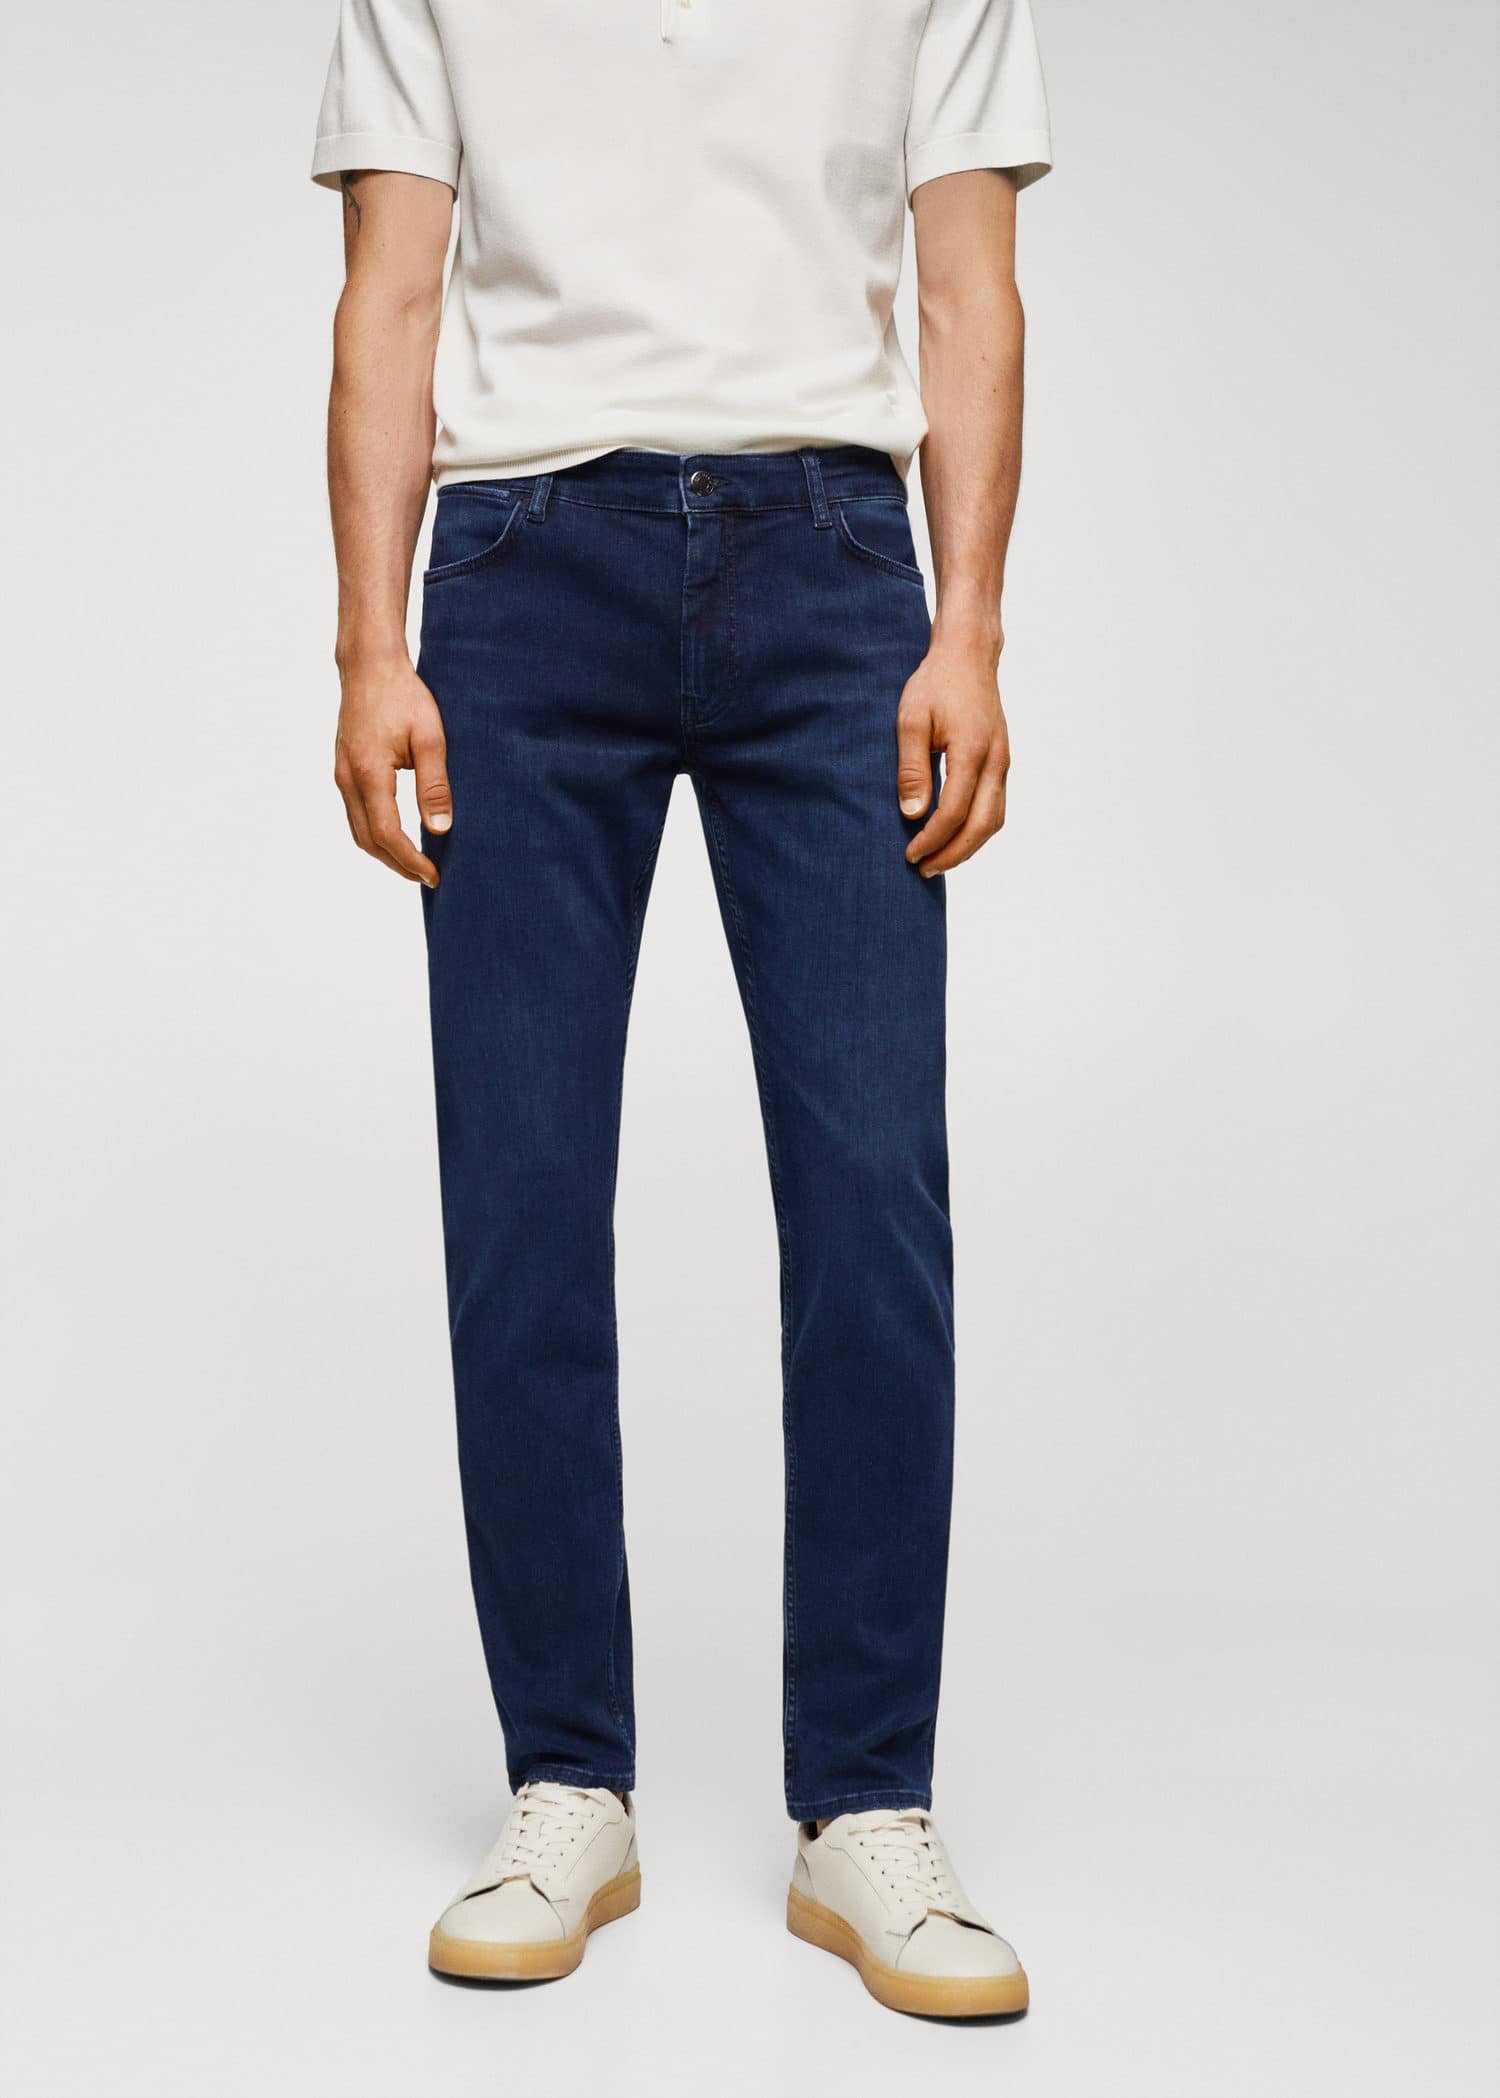 Slim fit Ultra Soft Touch Patrick jeans - Medium plane